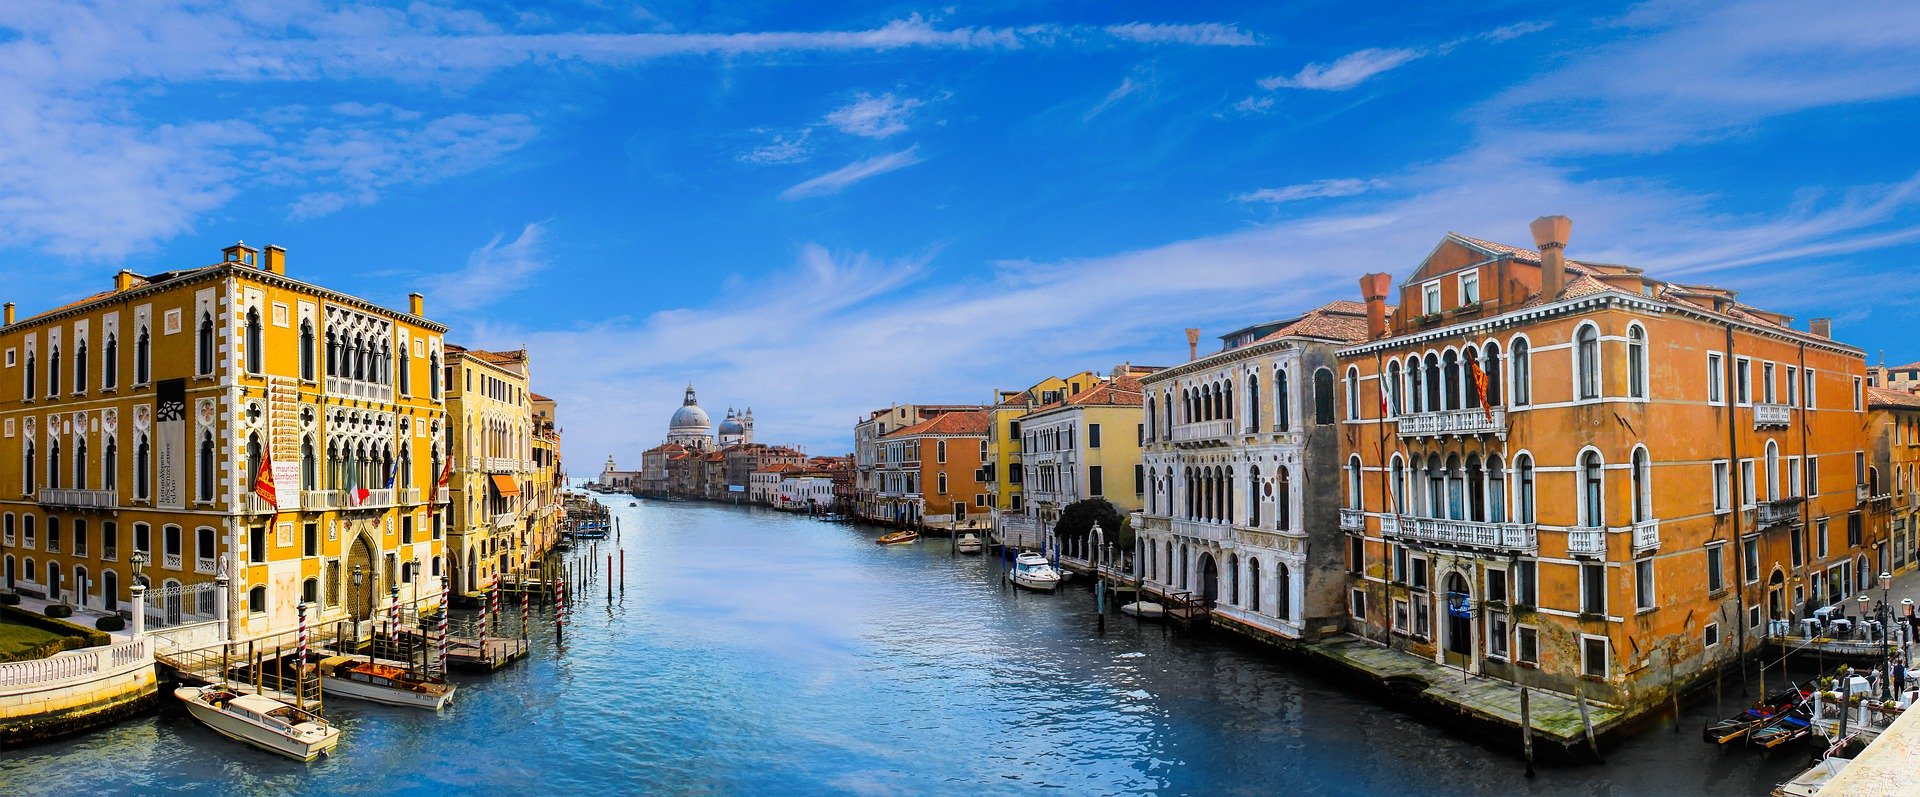 Canali venezia